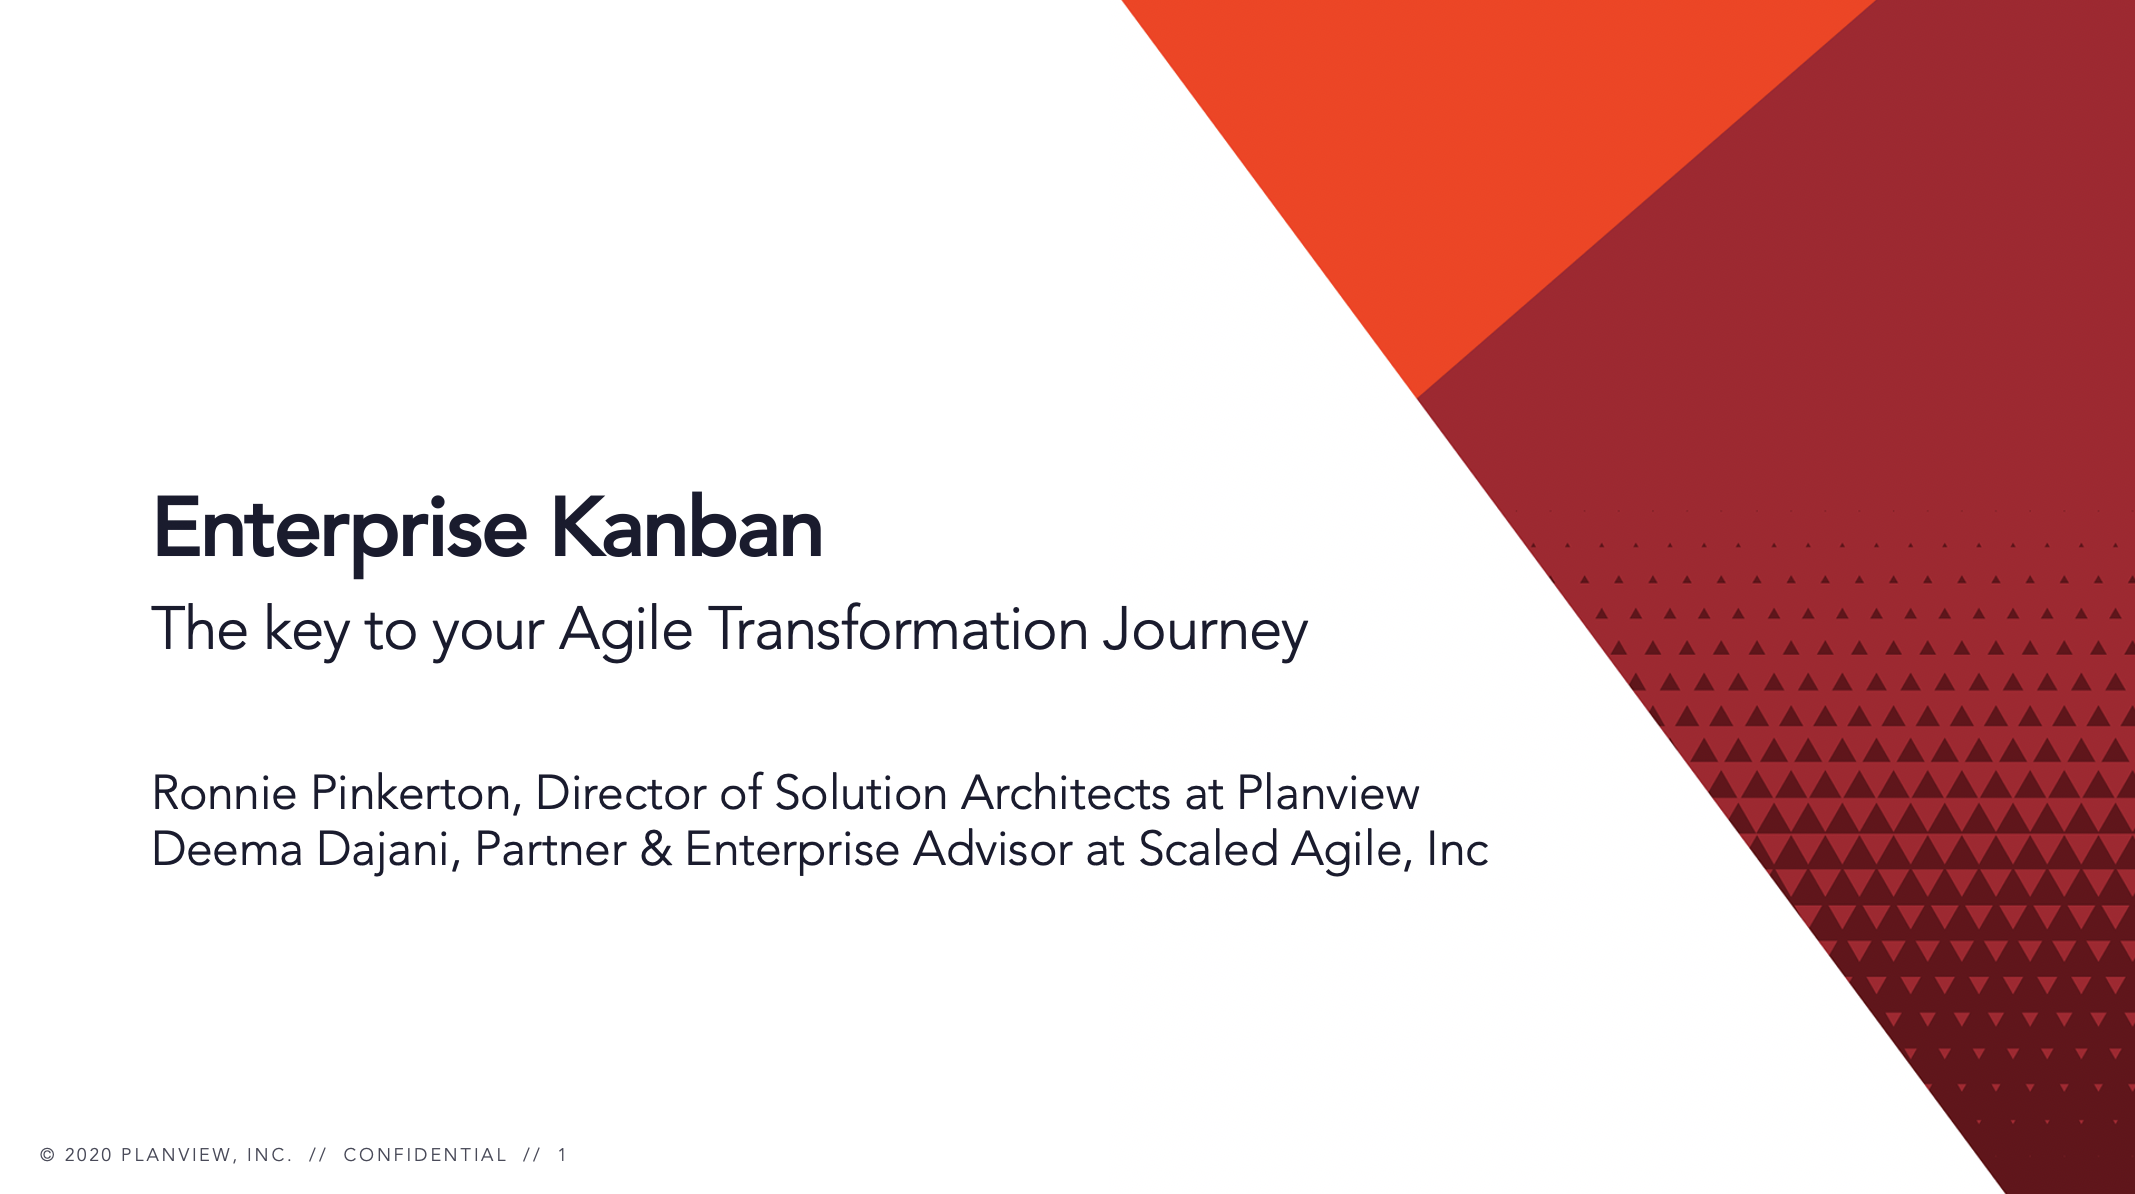 Enterprise Kanban: The key to your Agile Transformation Journey